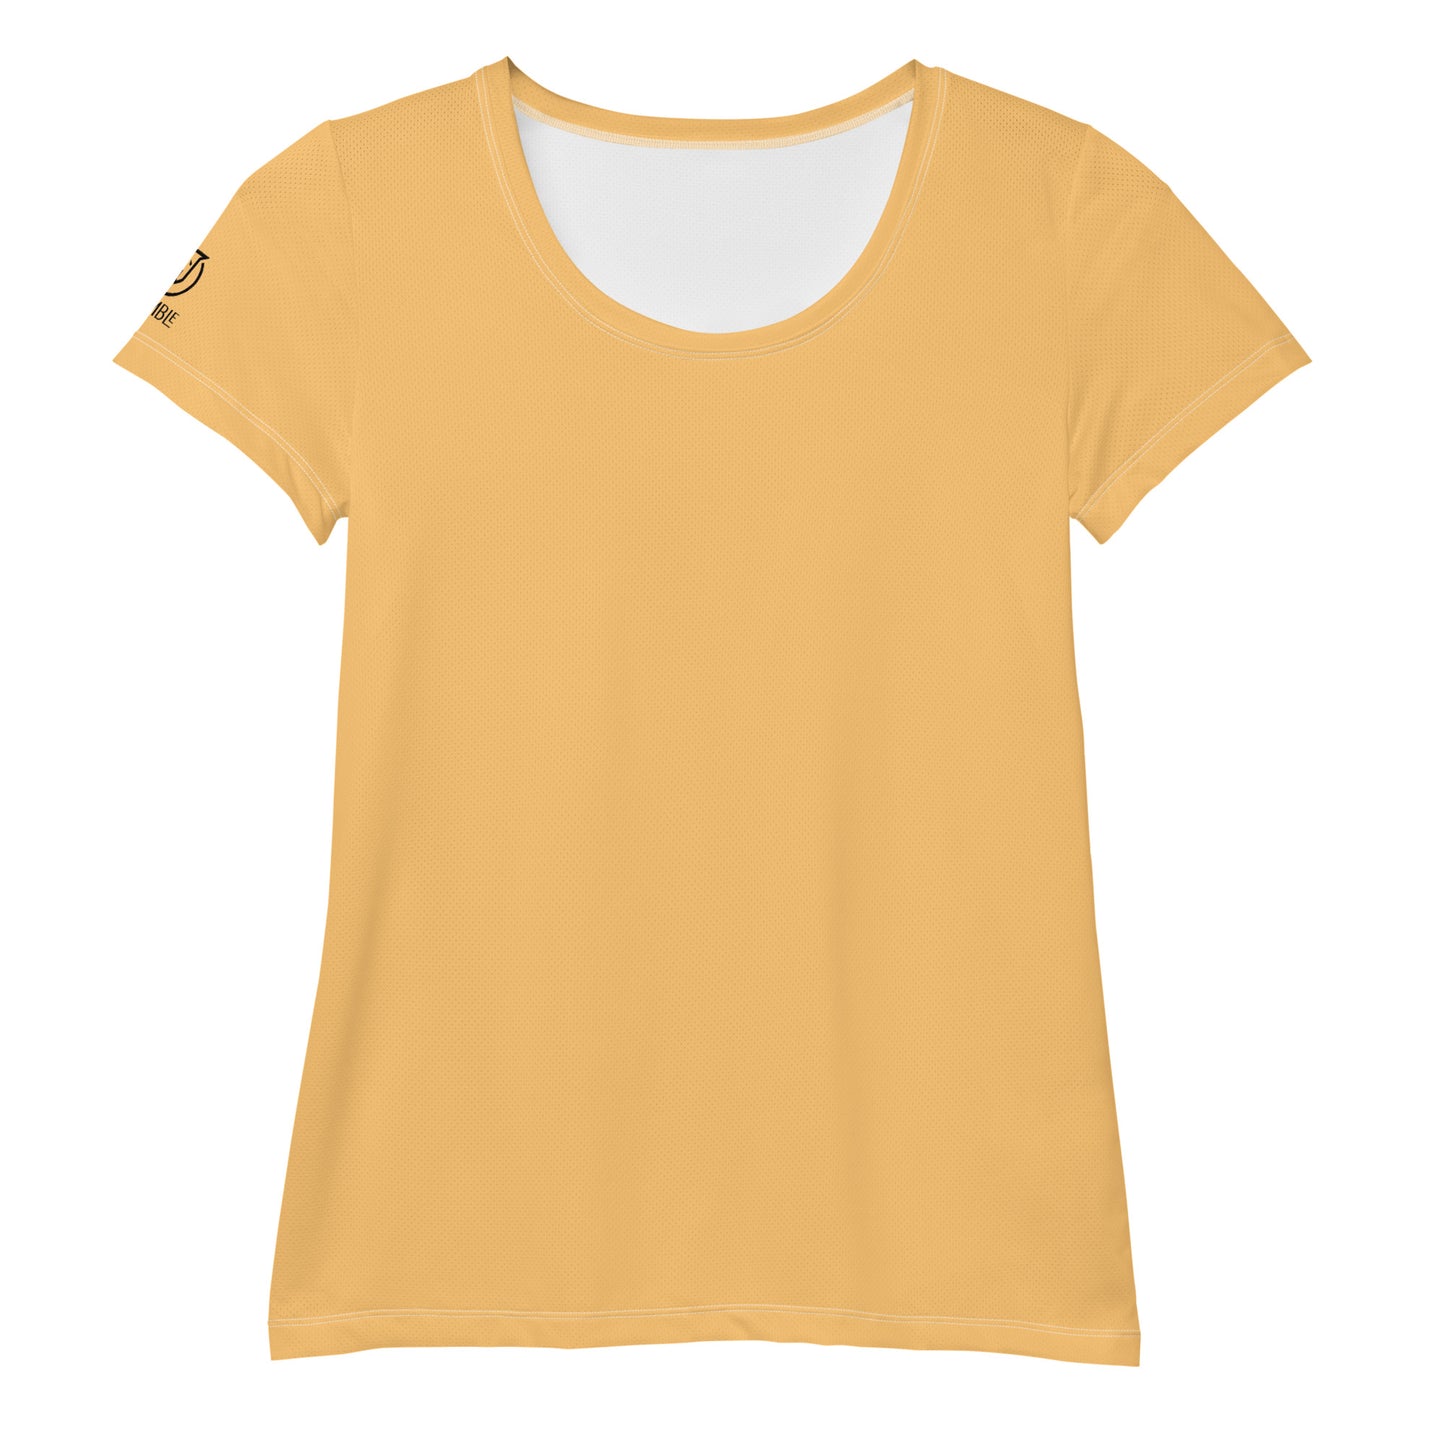 Humble Sportswear, women’s color match t-shirts, women’s tops, activewear, women’s mesh tops